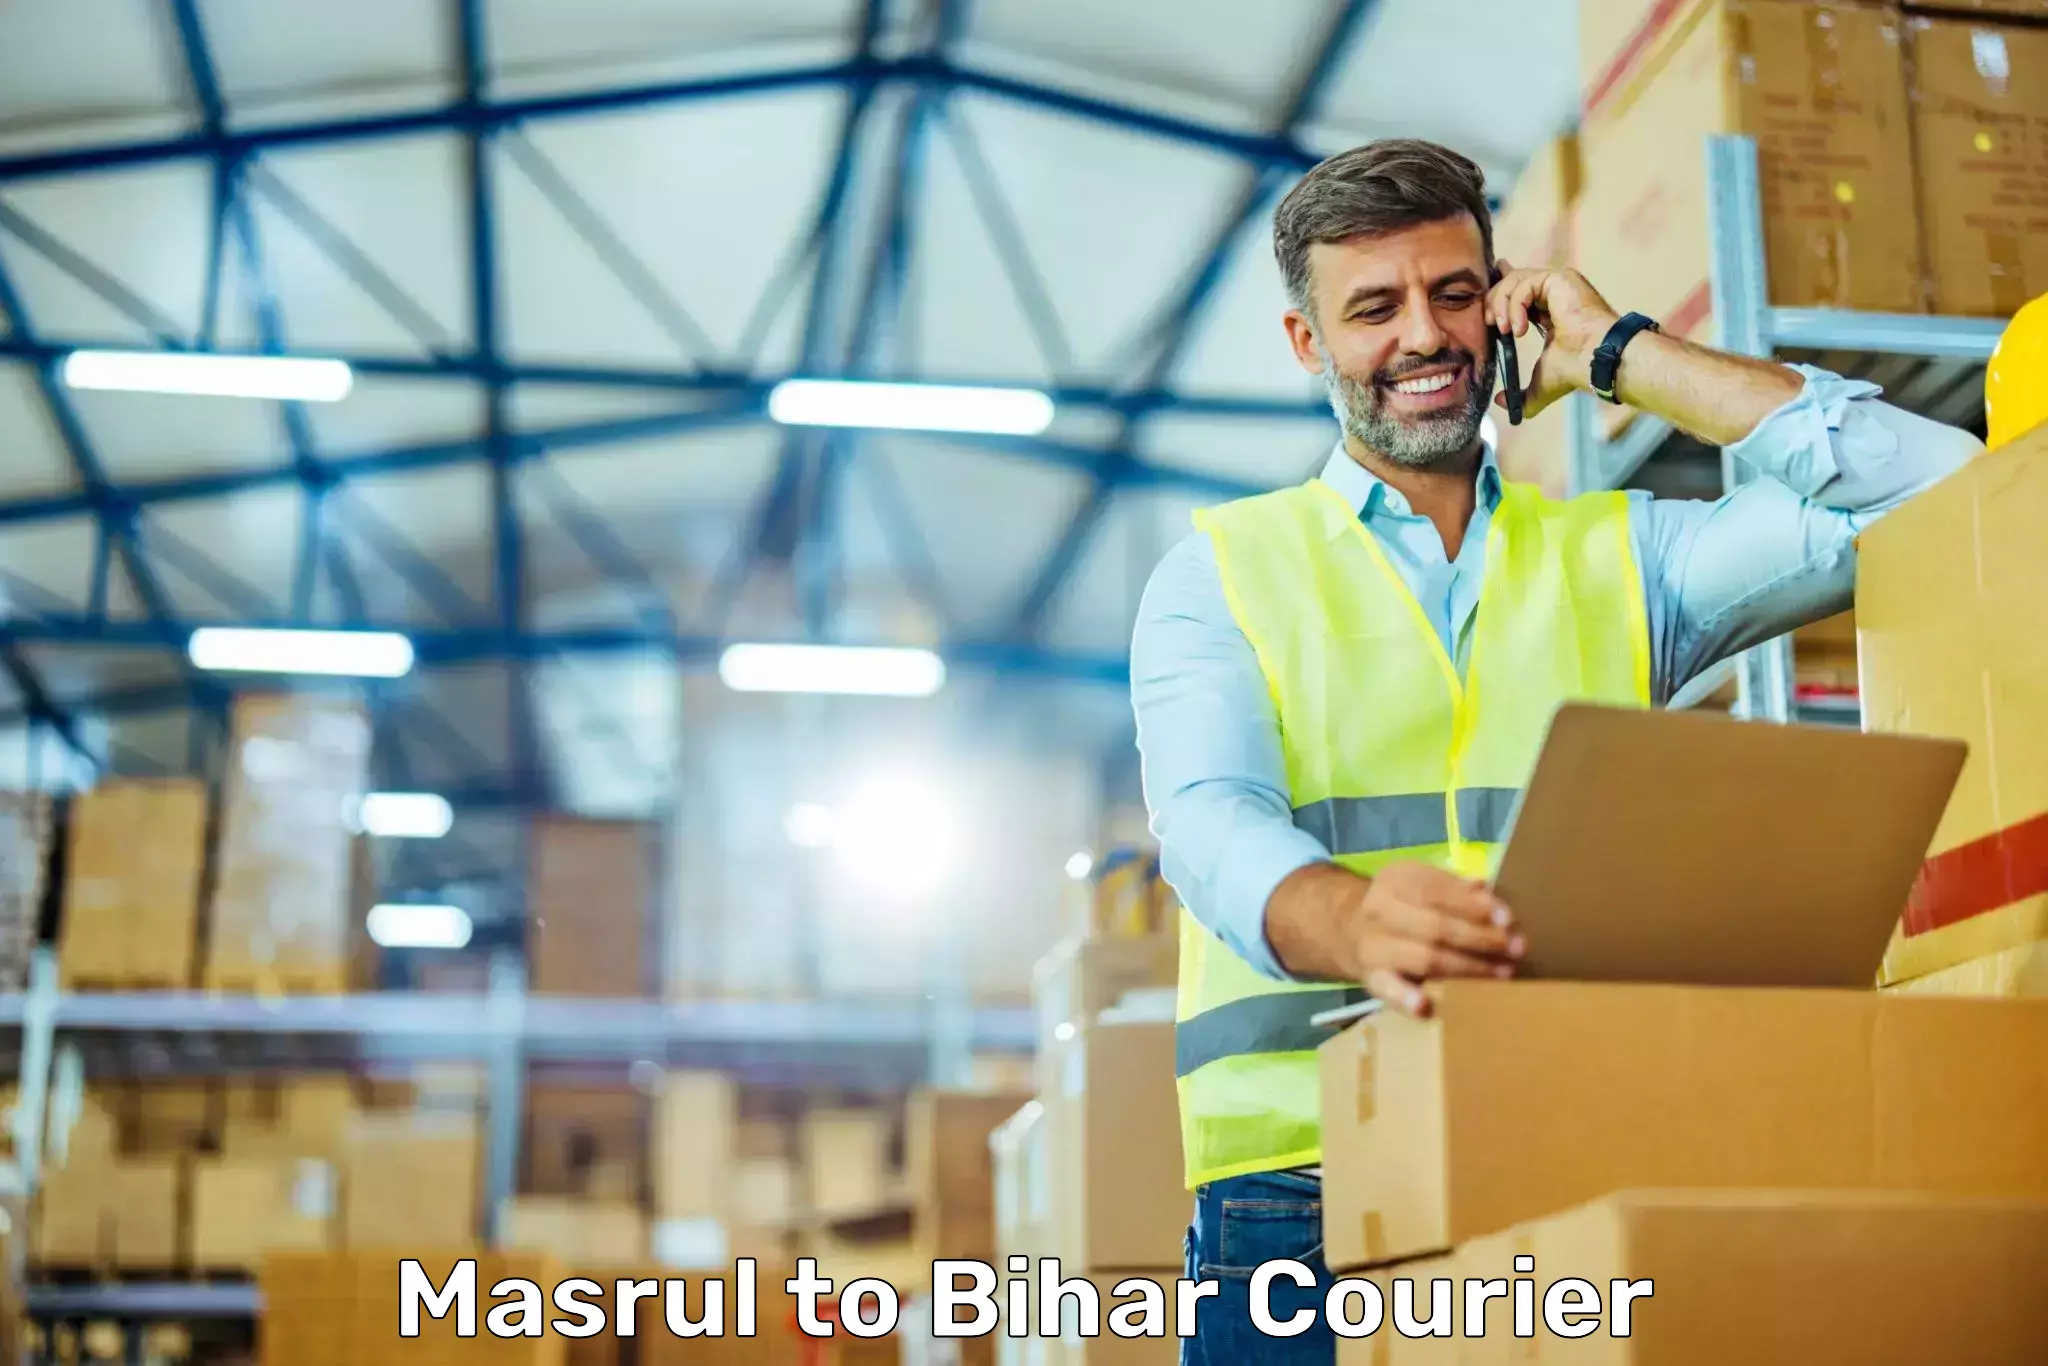 Return courier service in Masrul to Bihar